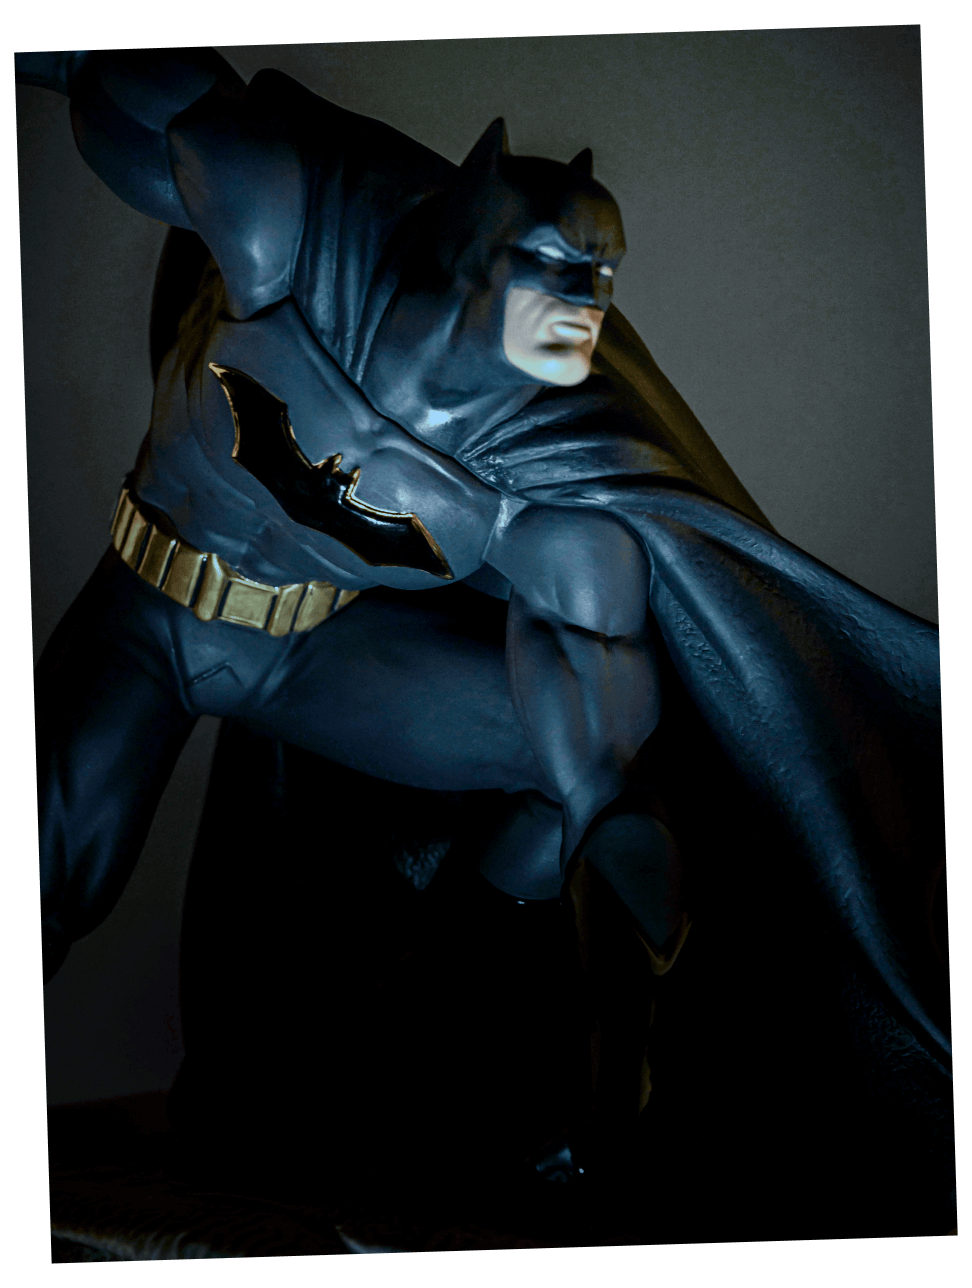 Batman sculpture in his iconic pose